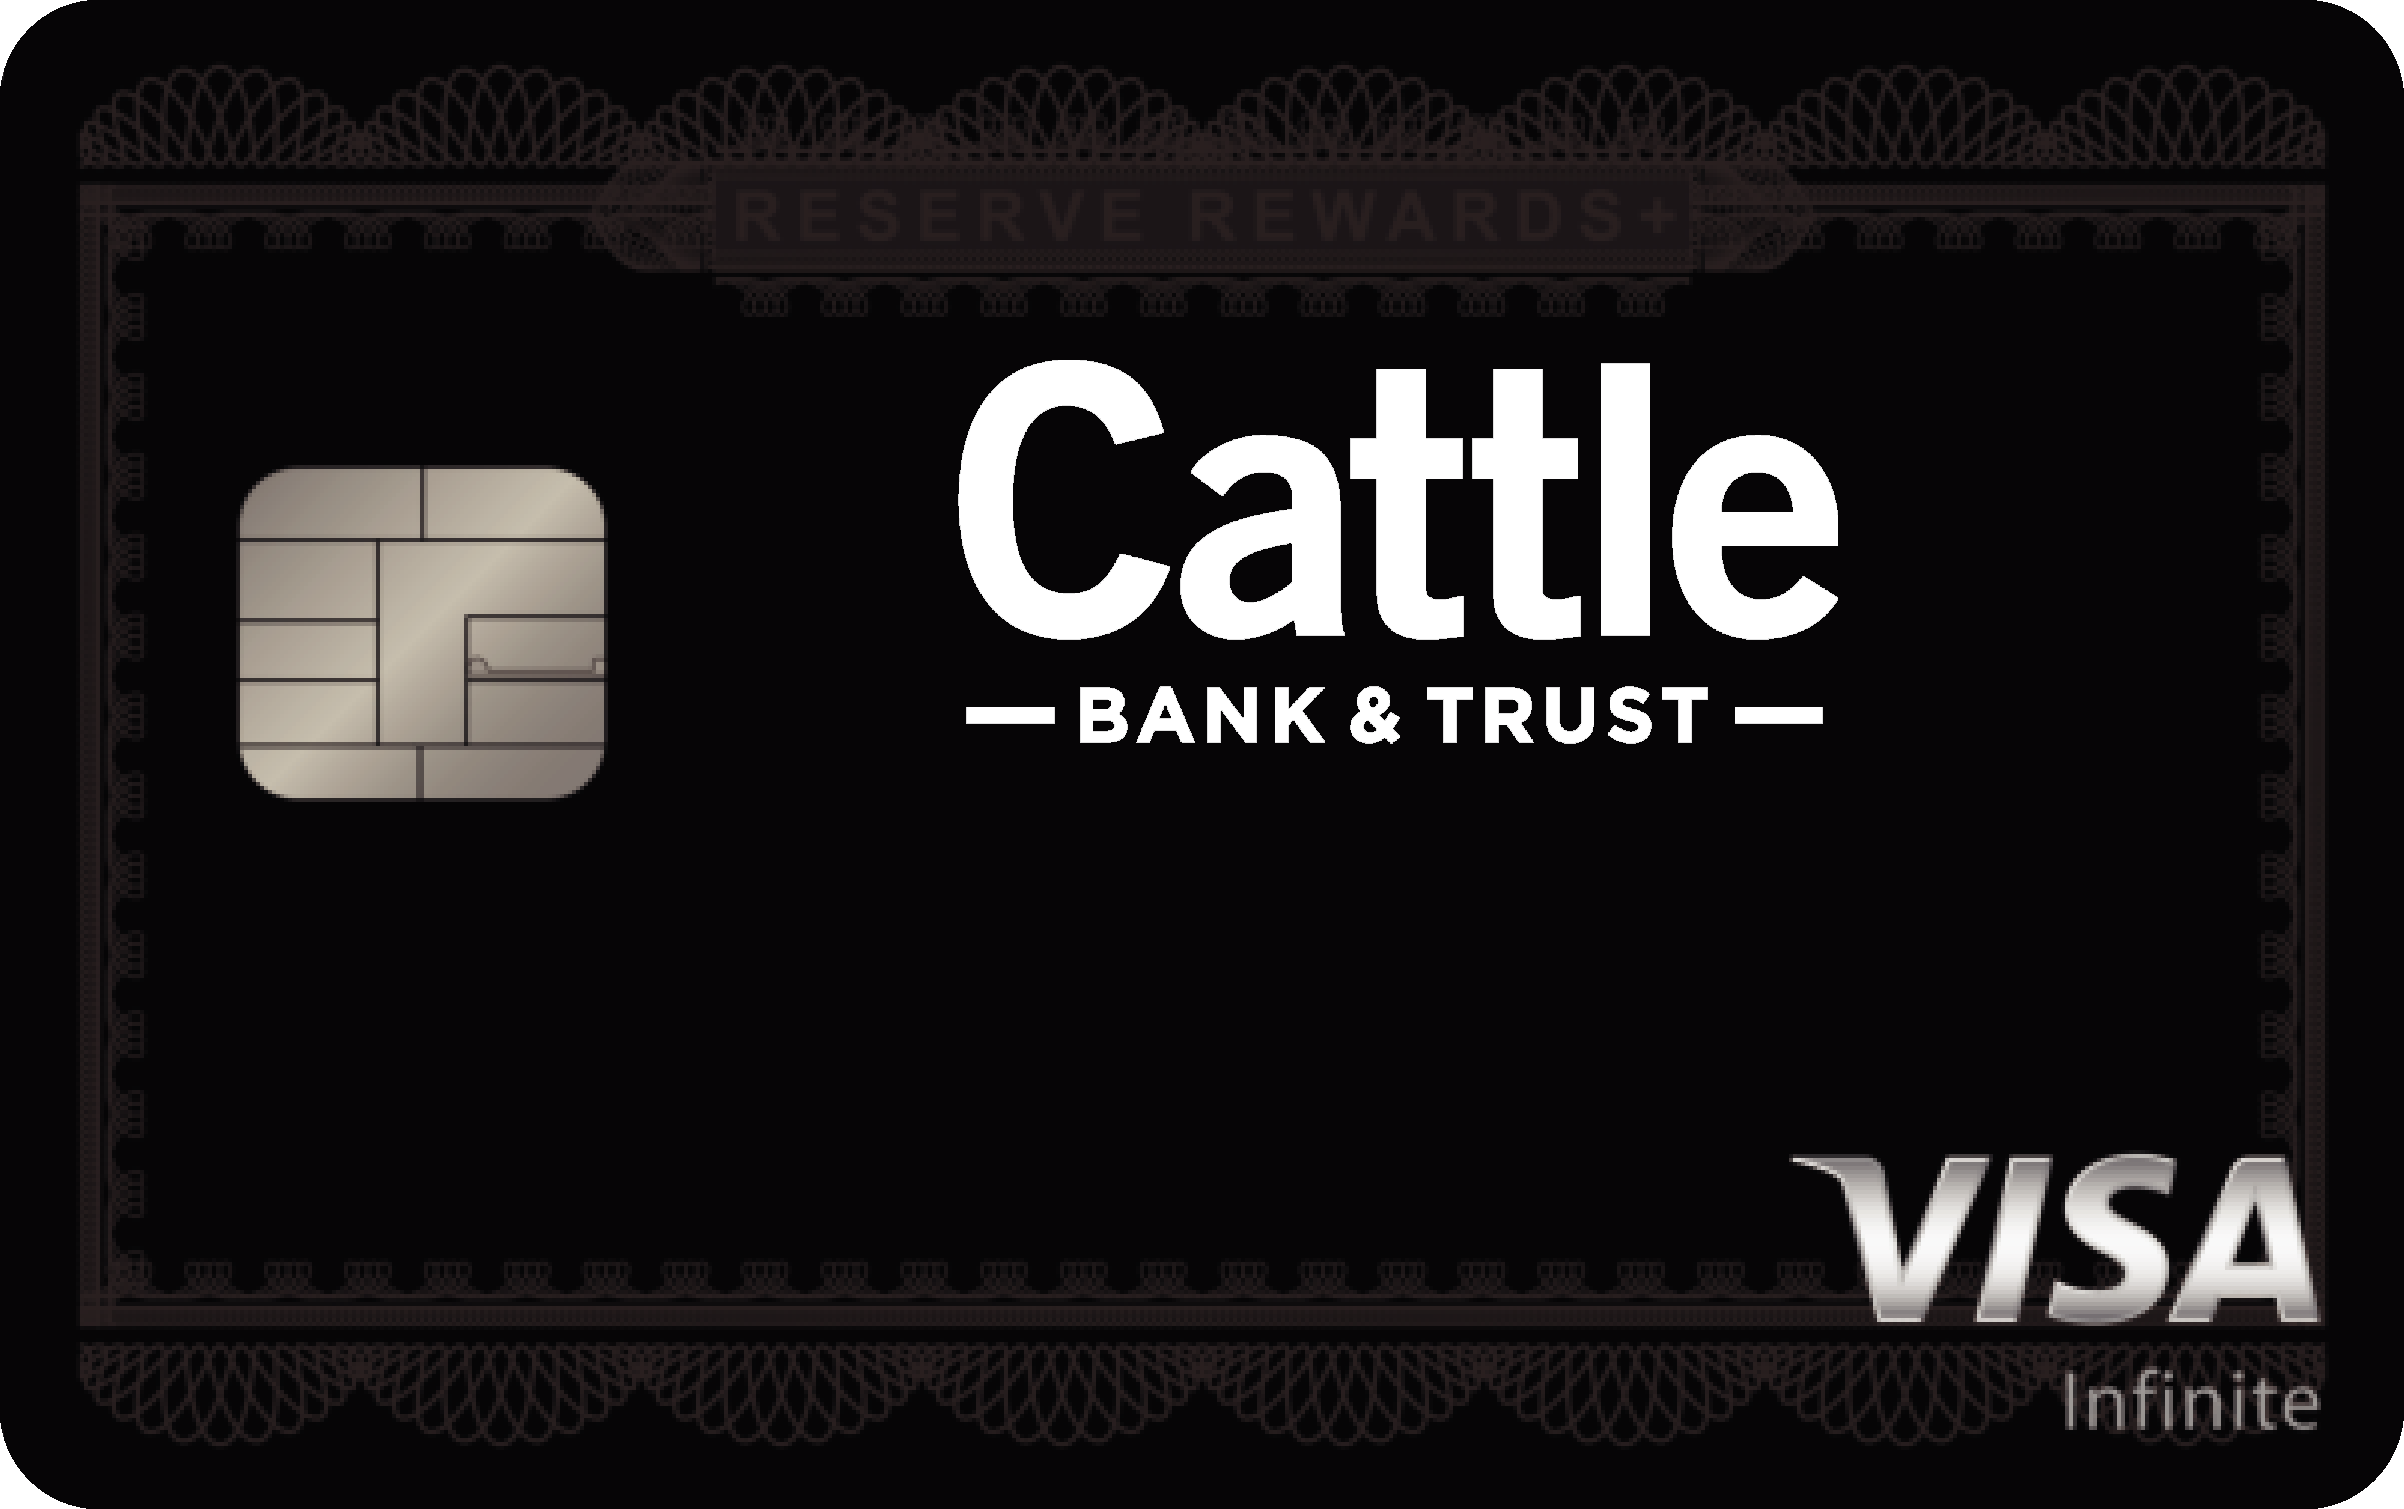 Cattle Bank & Trust